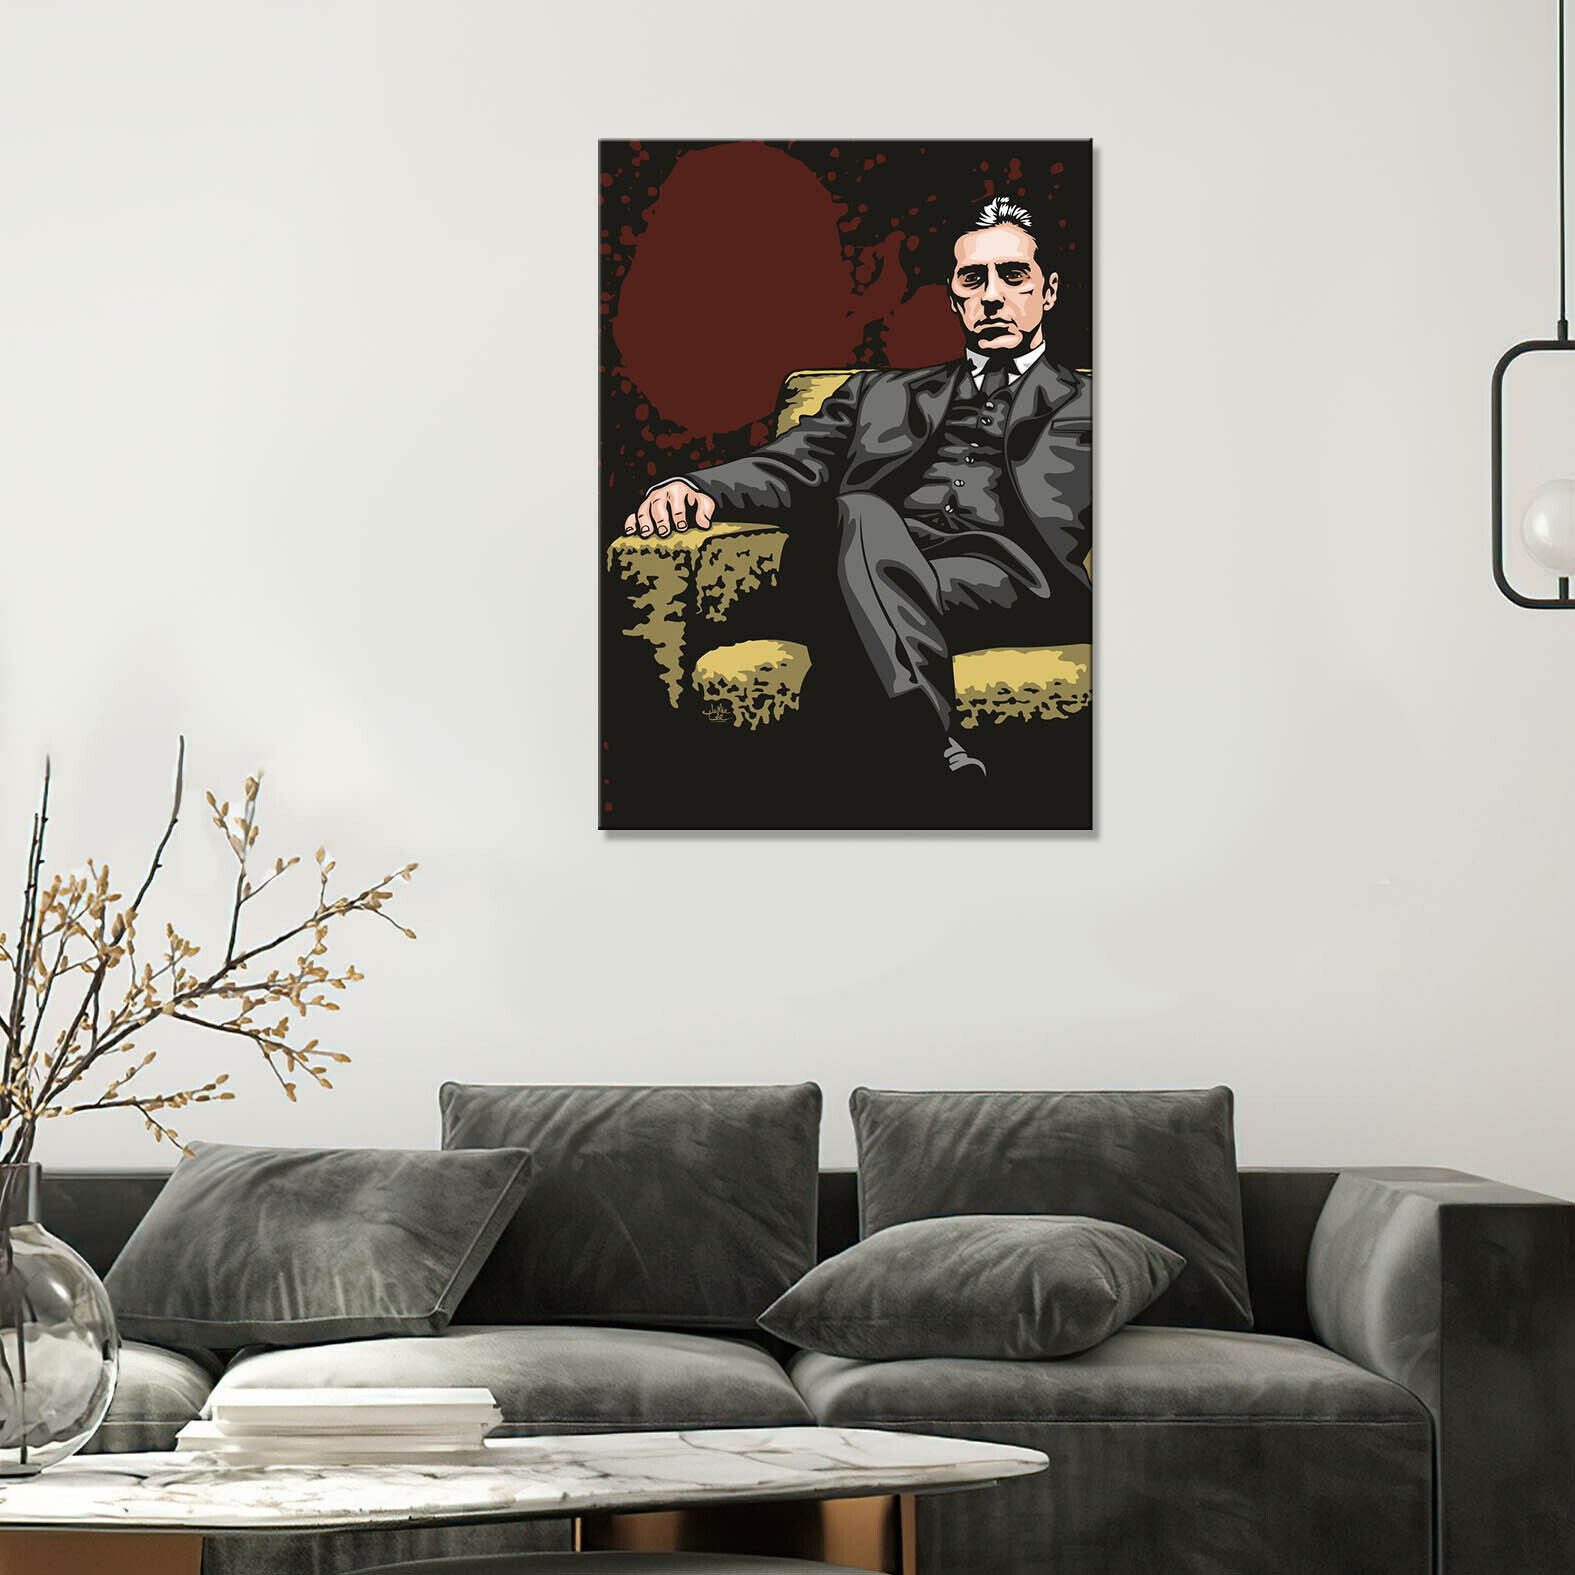 Интерьерная картина на холсте/ картина на стену/ в гостиную/ спальню - Майкл Корлеоне арт 40х60